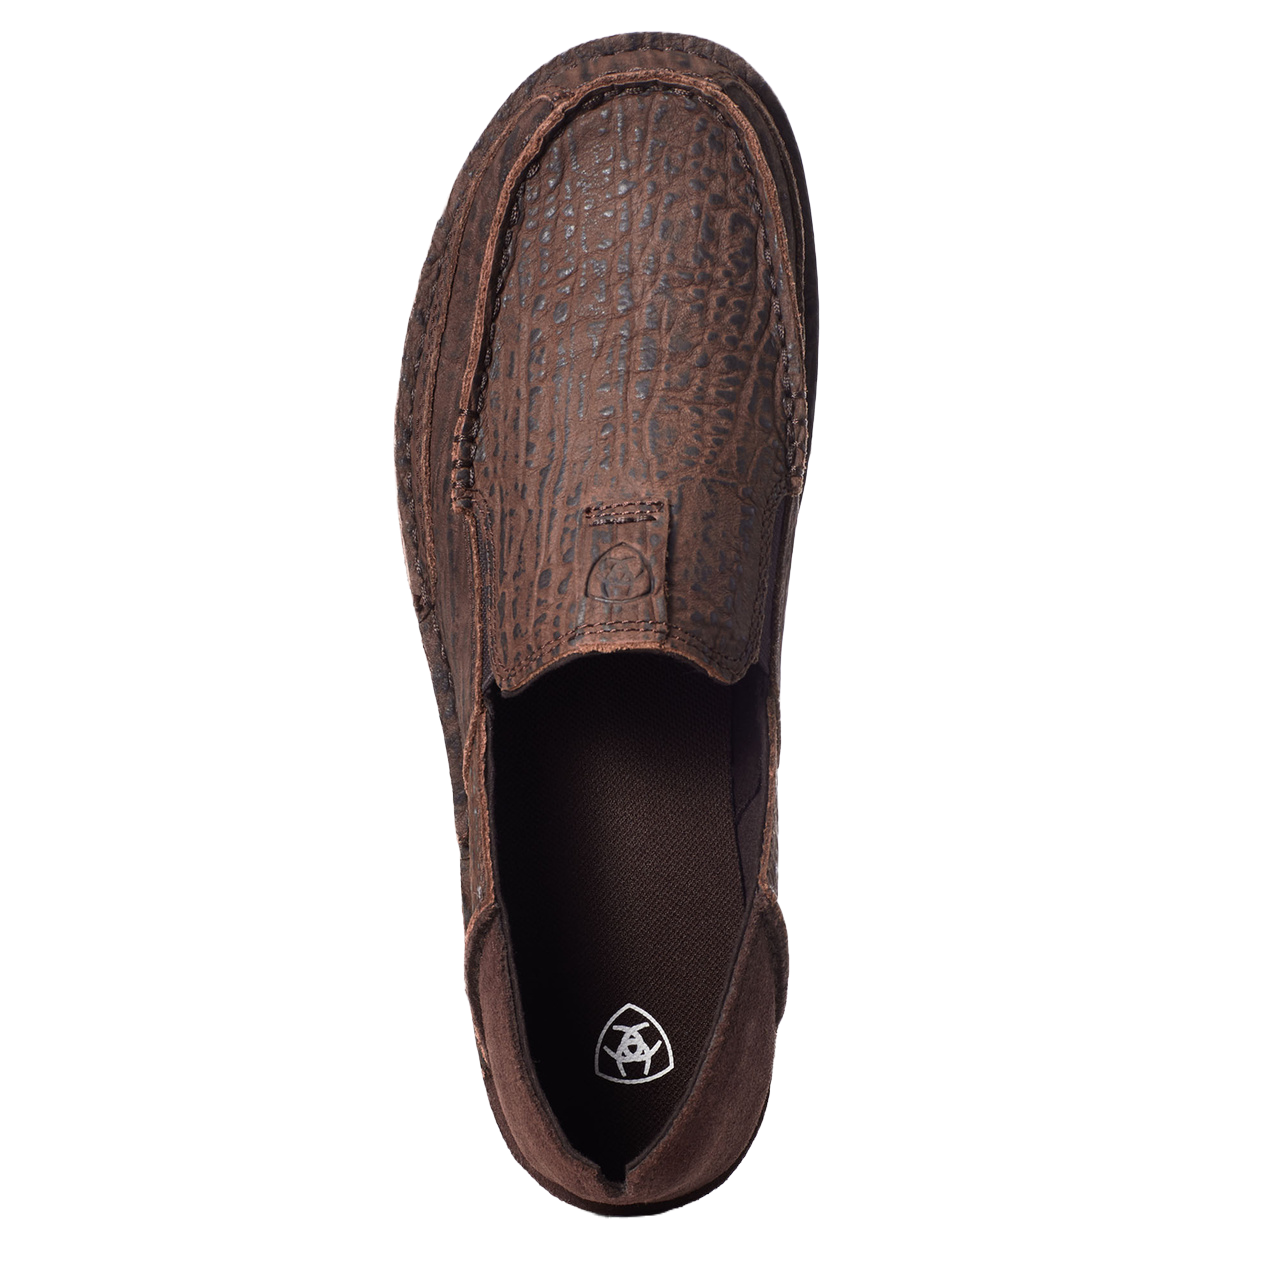 Ariat® Men's Cruiser Bark Bison & Chocolate Suede Shoes 10035824